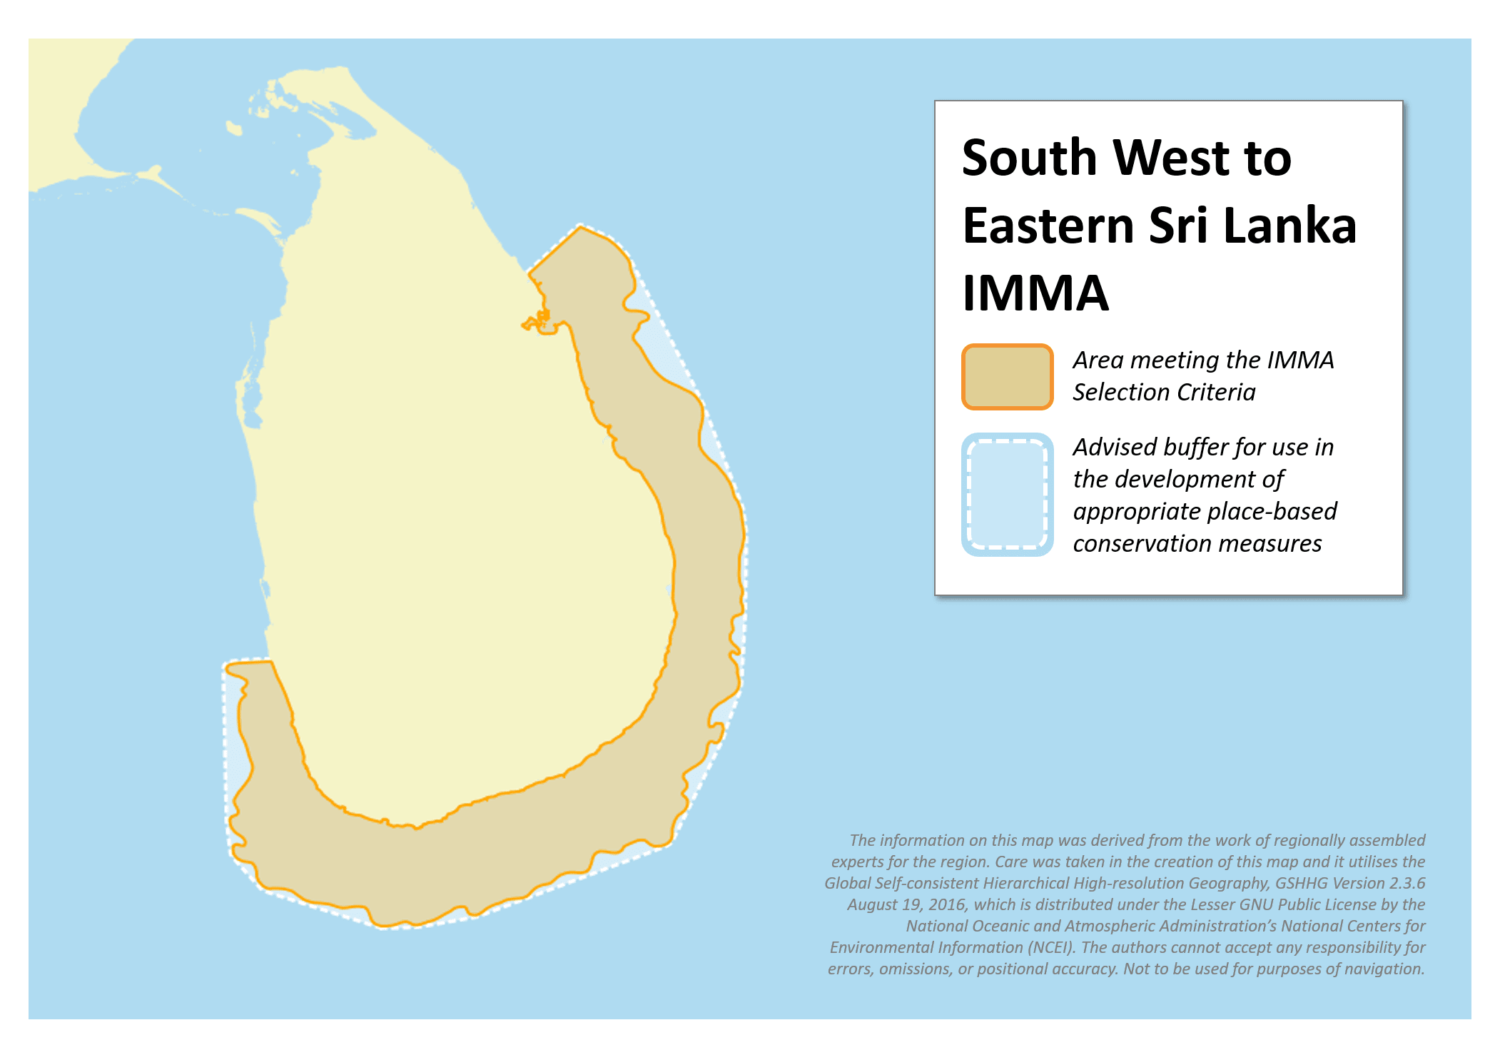 South-West-to-Eastern-Sri-Lanka-IMMA-1500x1050